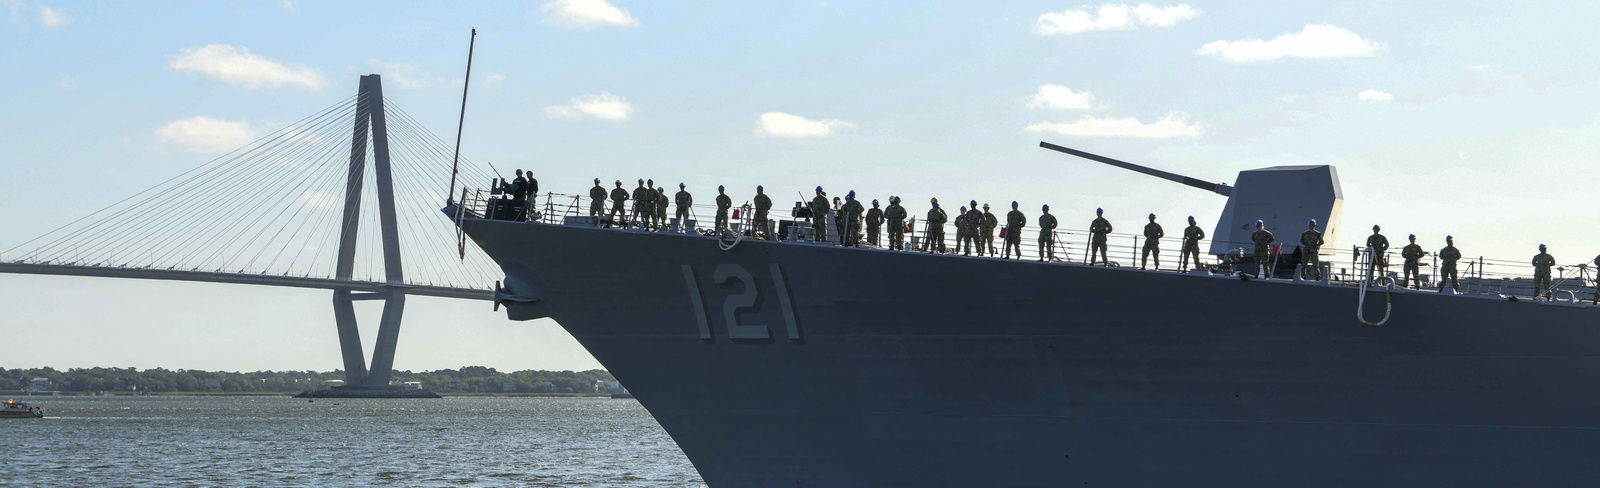 Side naval ship sailing through the ocean with a Mk 45 Naval Gun on the deck (U.S. Navy Photo)